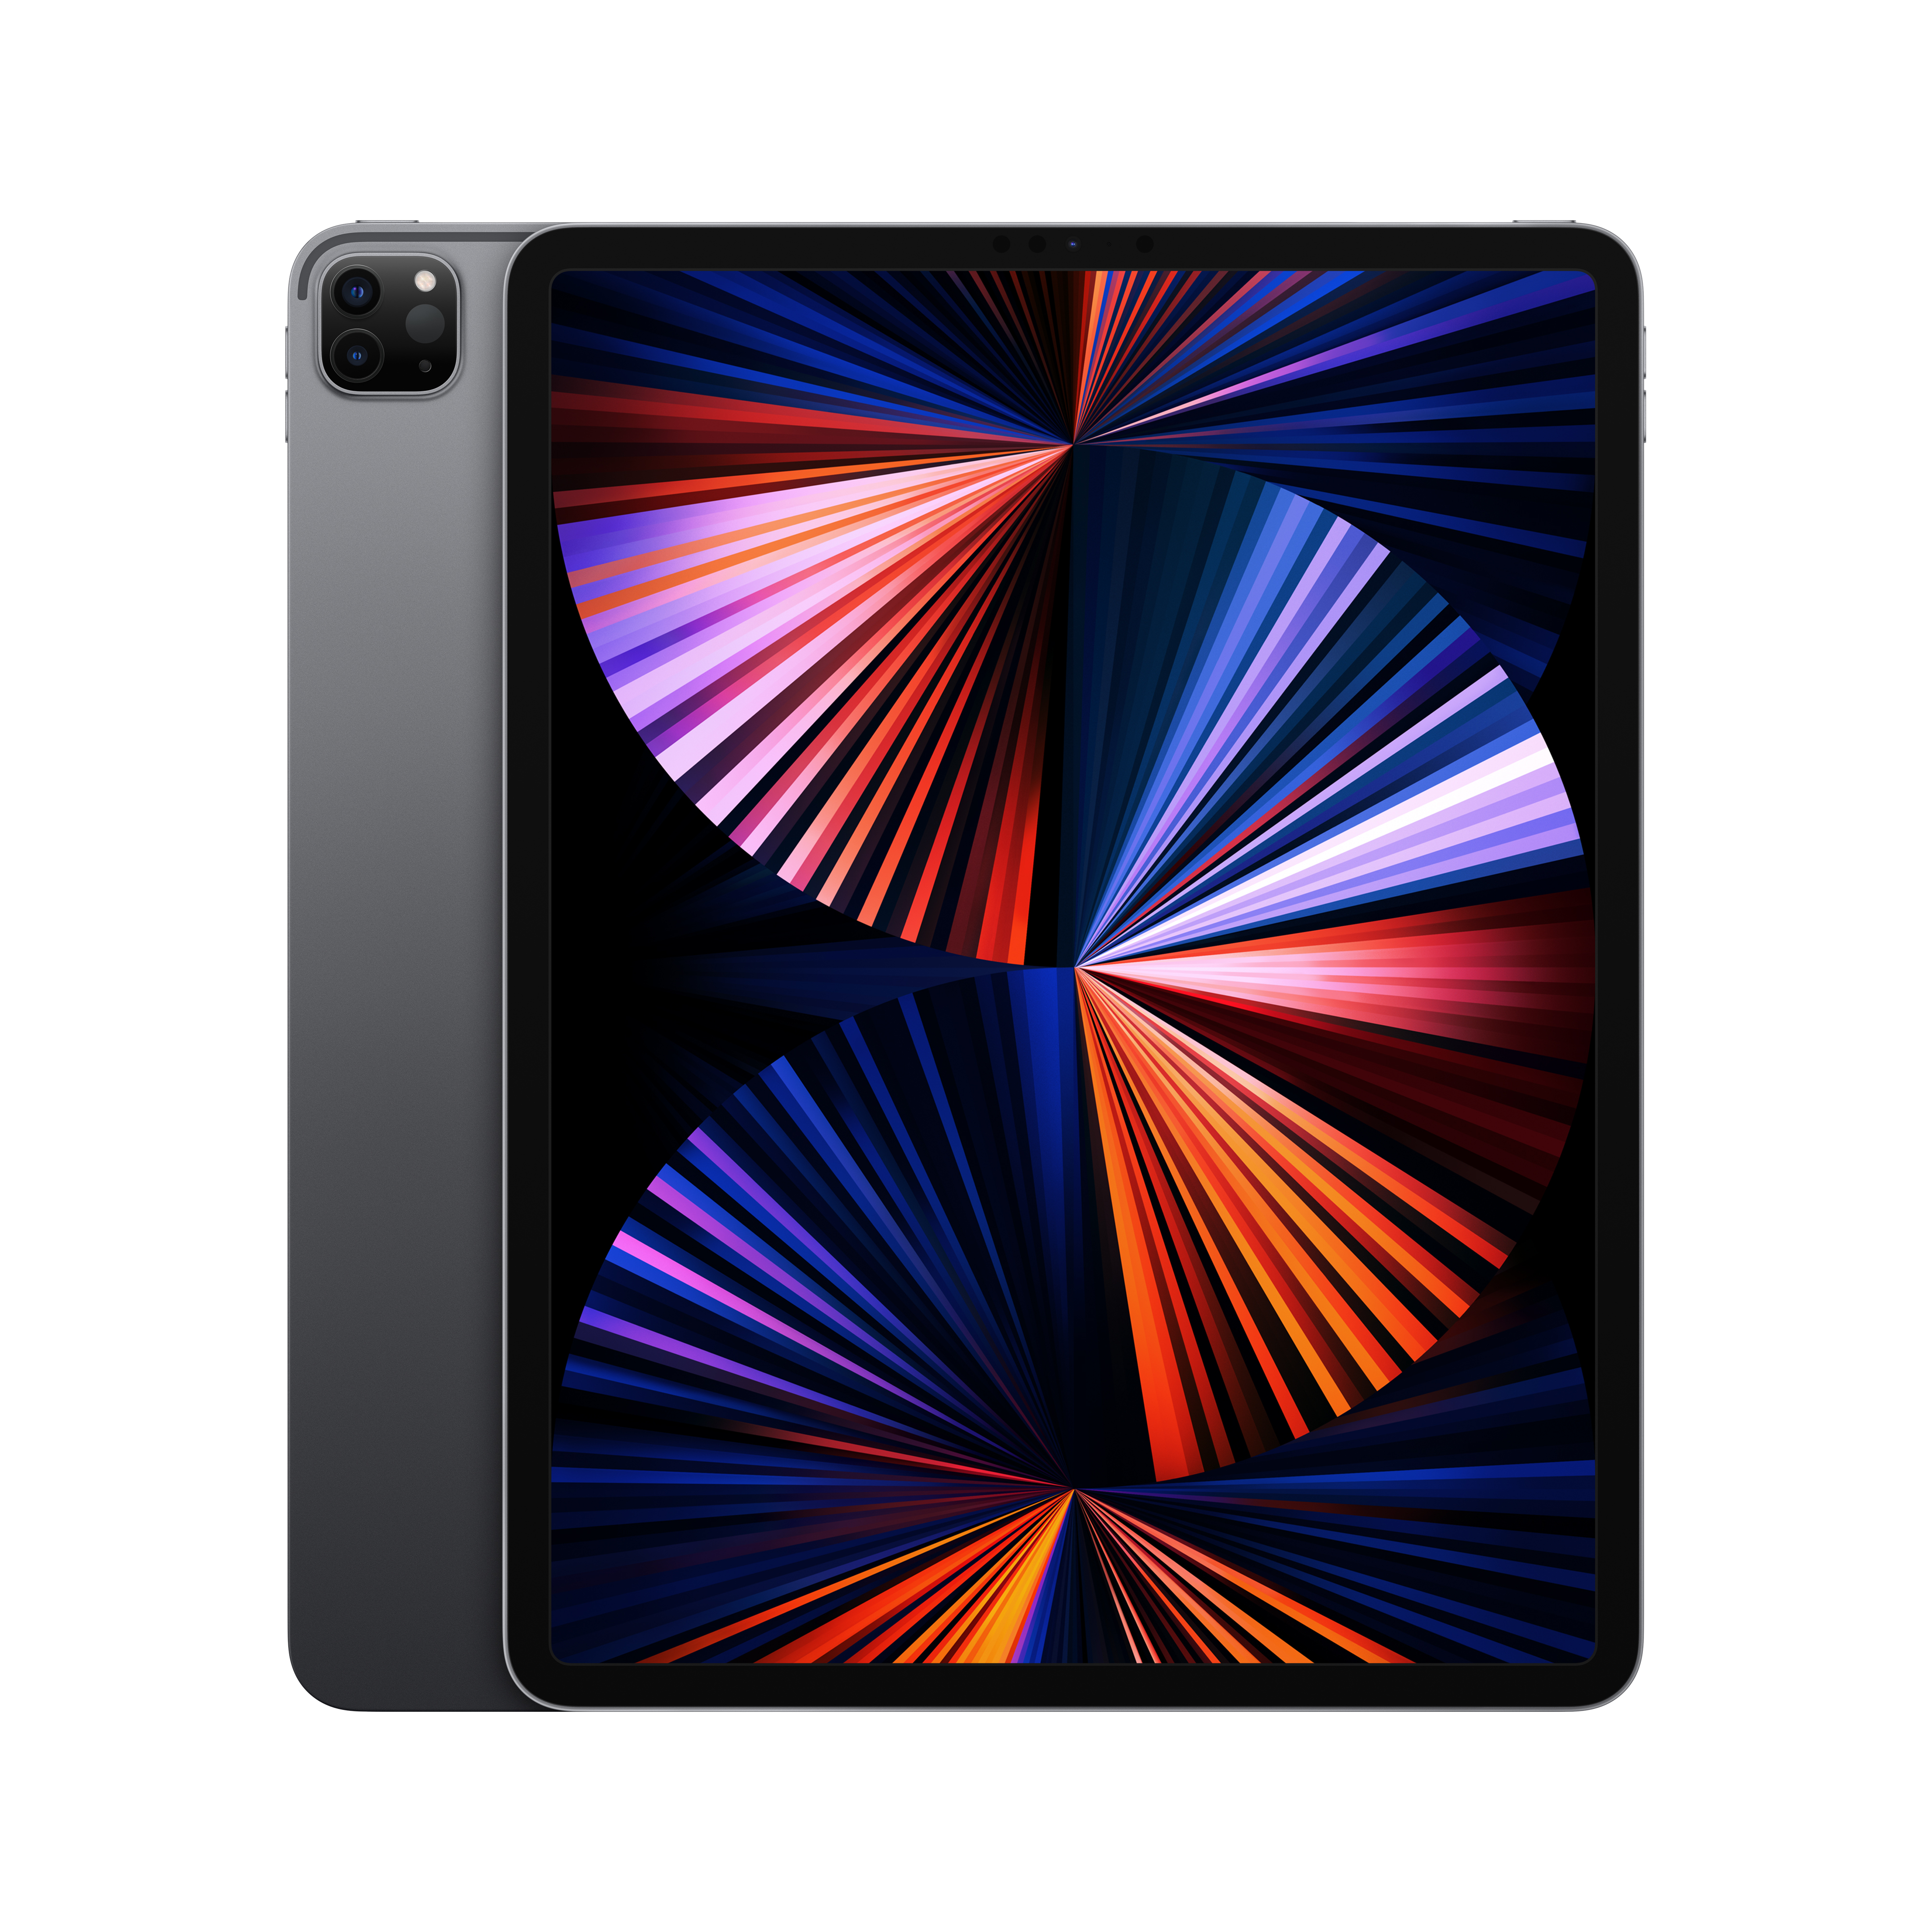 Apple 12.9-inch iPad Pro (2021) Wi-Fi 512GB - Space Gray - image 1 of 9